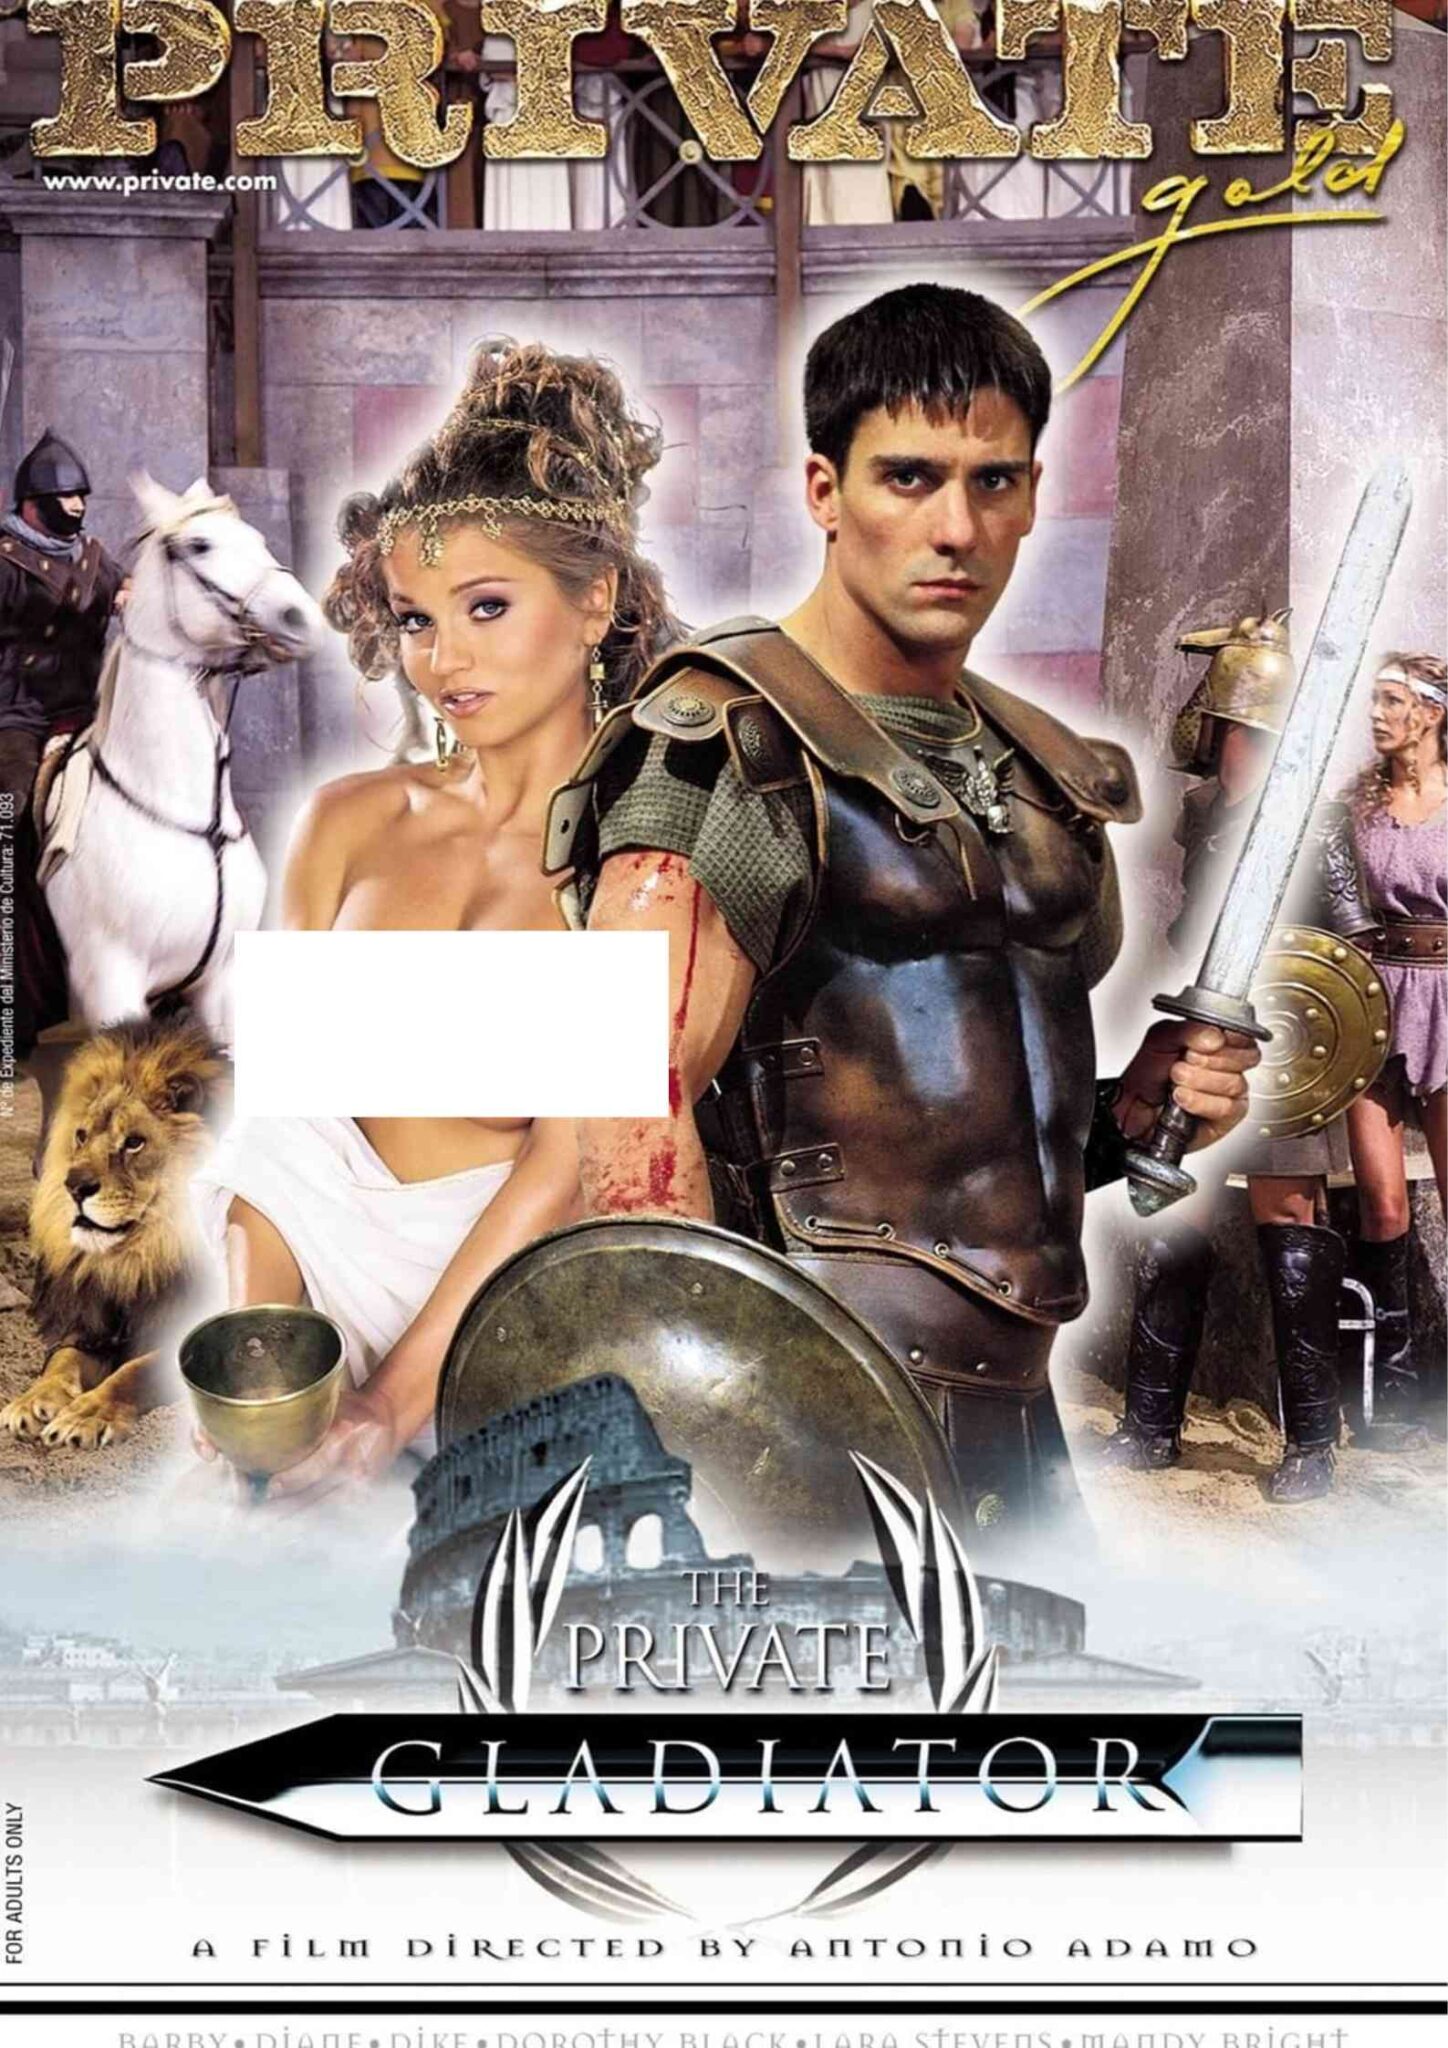 FULL MOVIE: The Private Gladiator (2002) [18+]